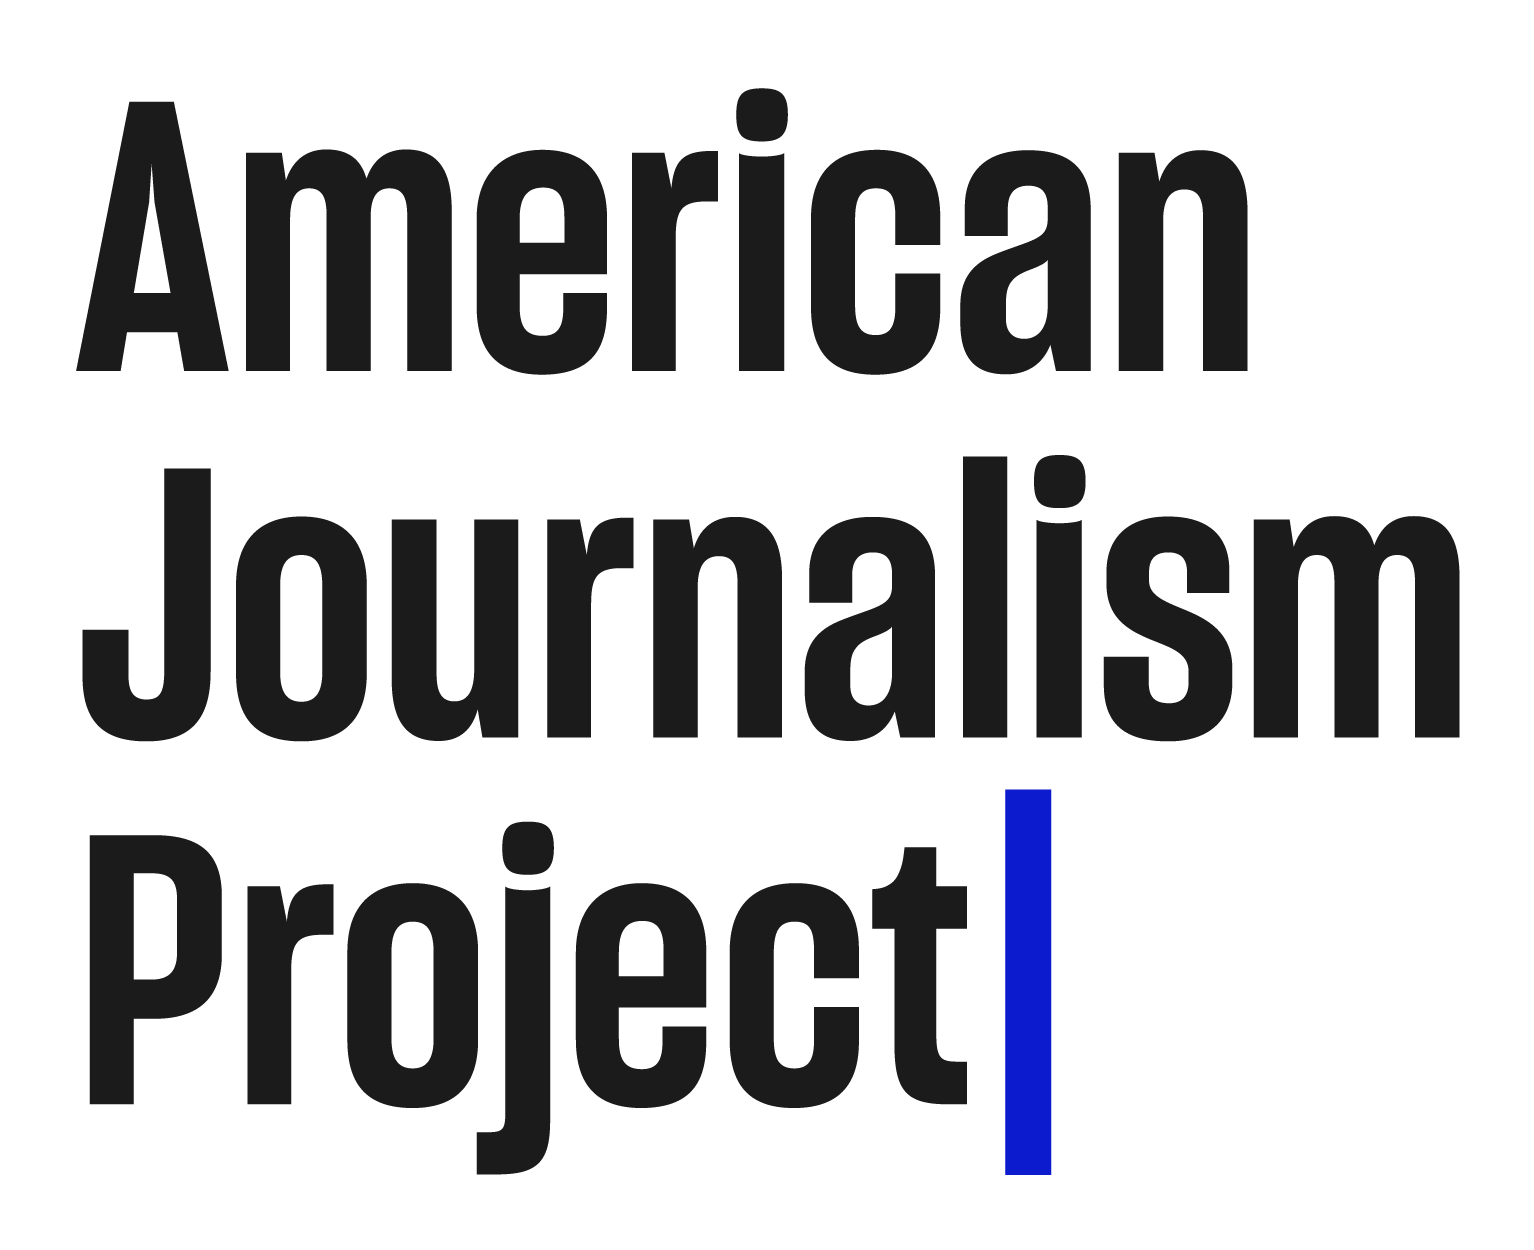 American Journalism Project logo